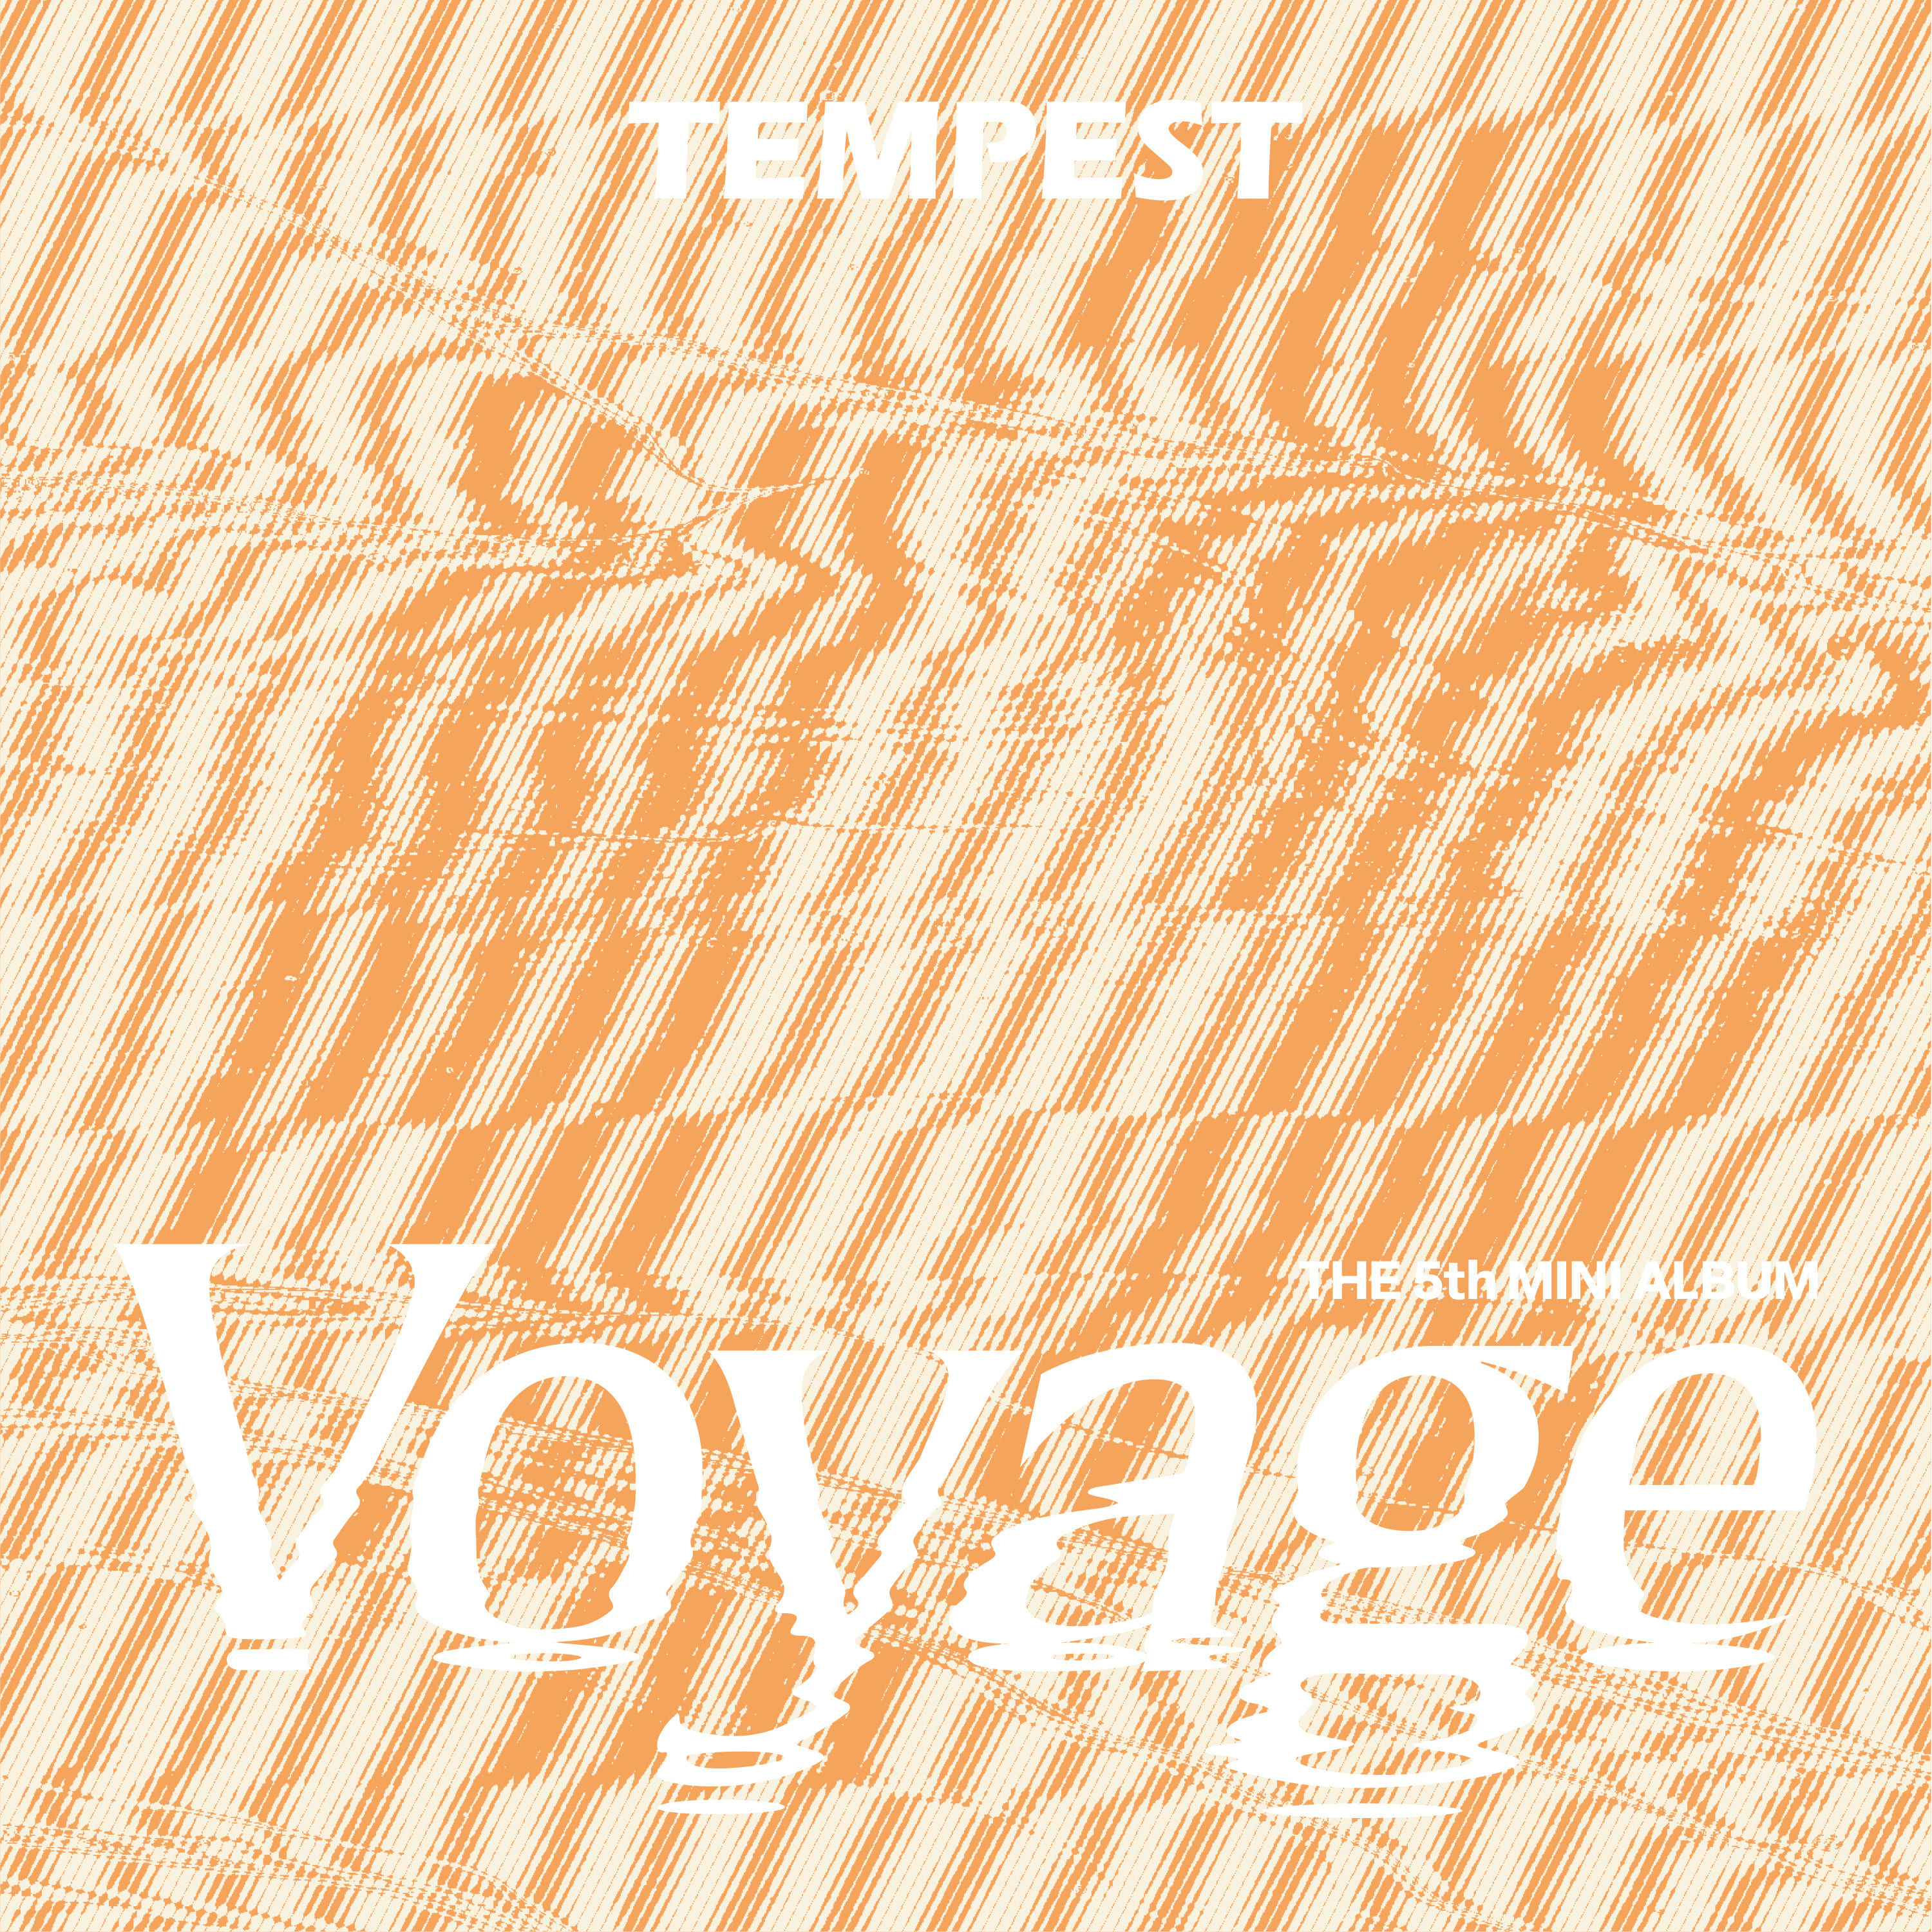 TEMPEST Voyage